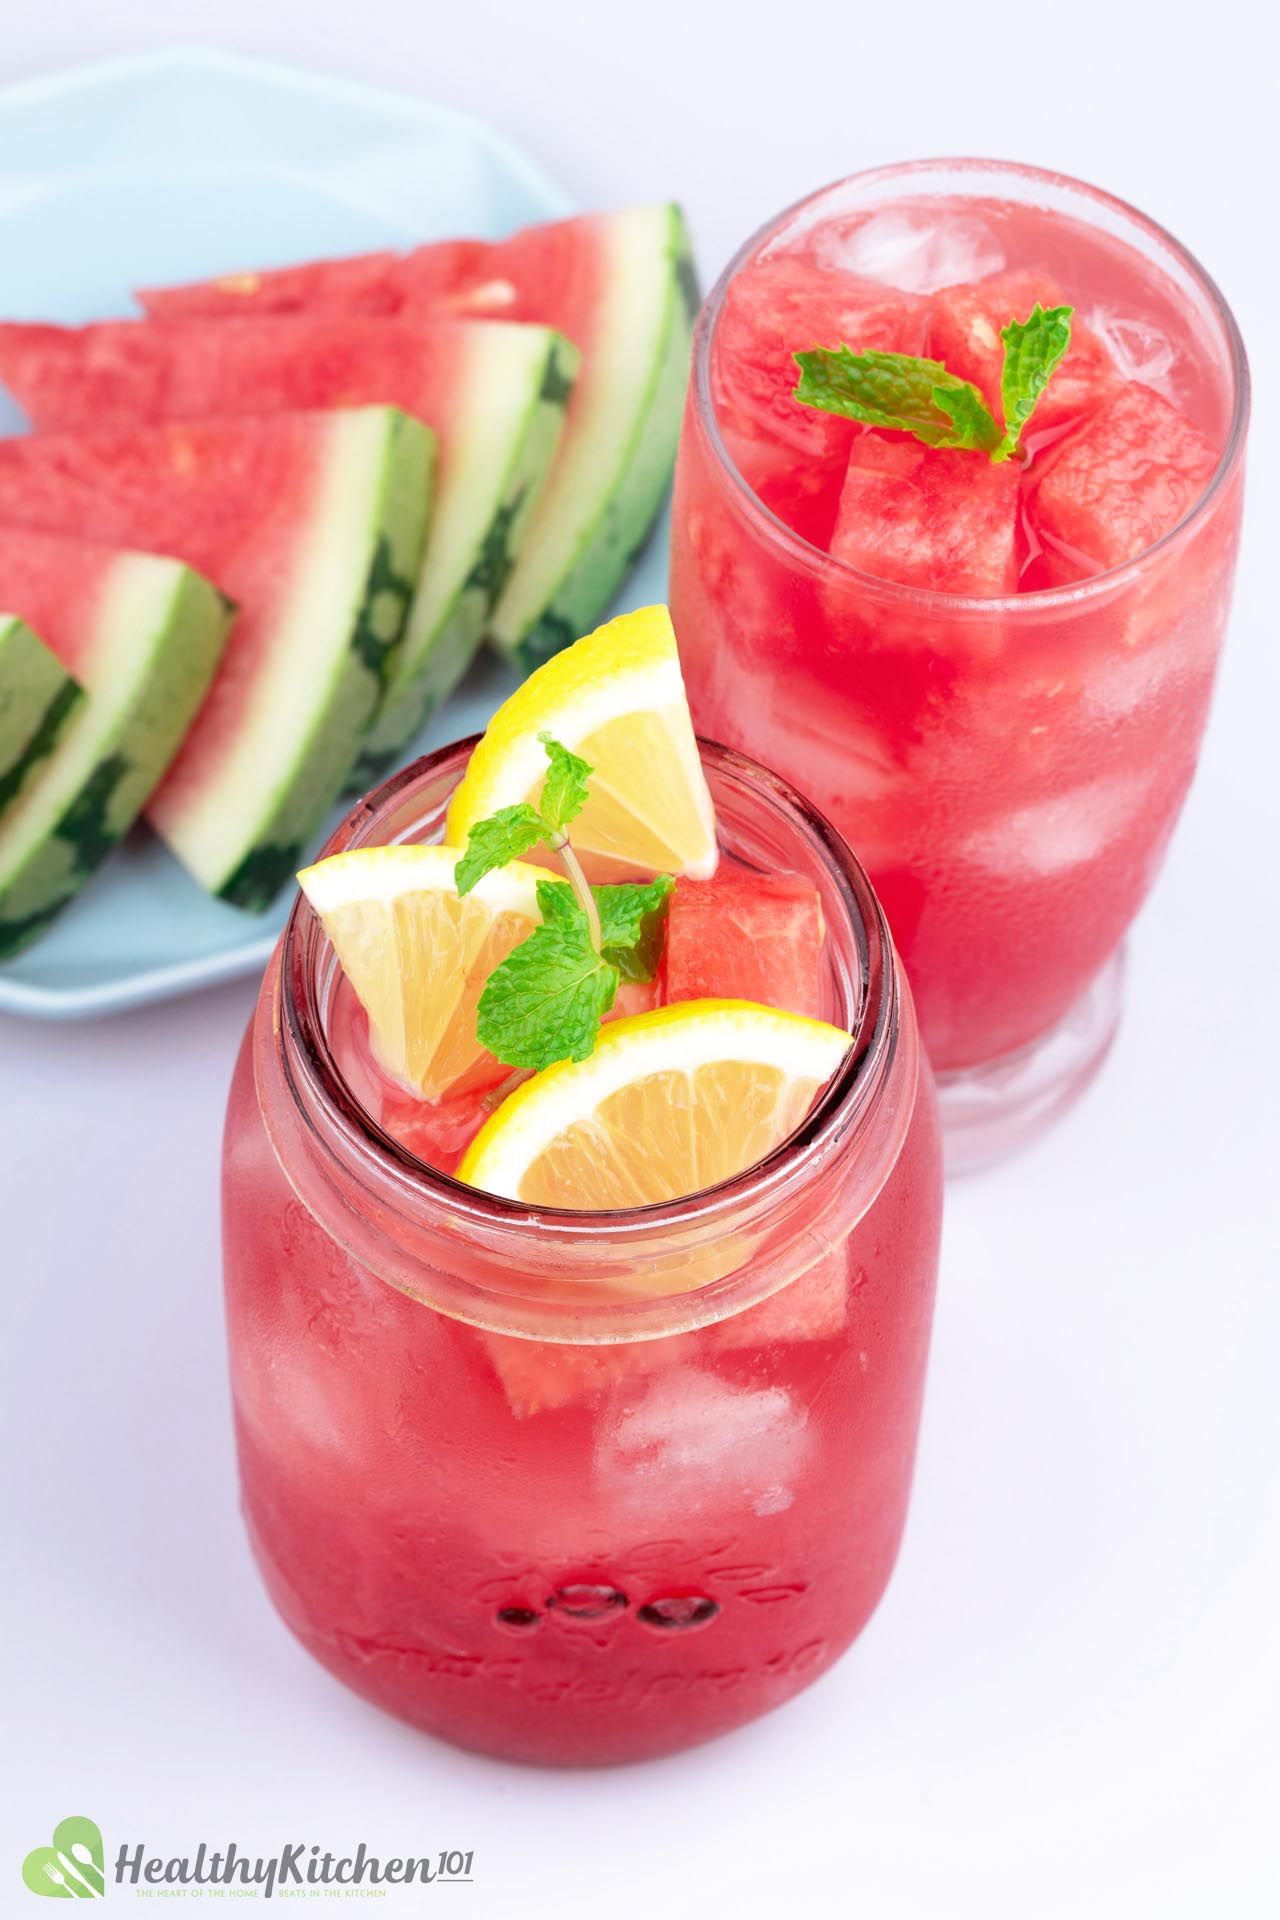 Watermelon Juice and Lemon Recipe